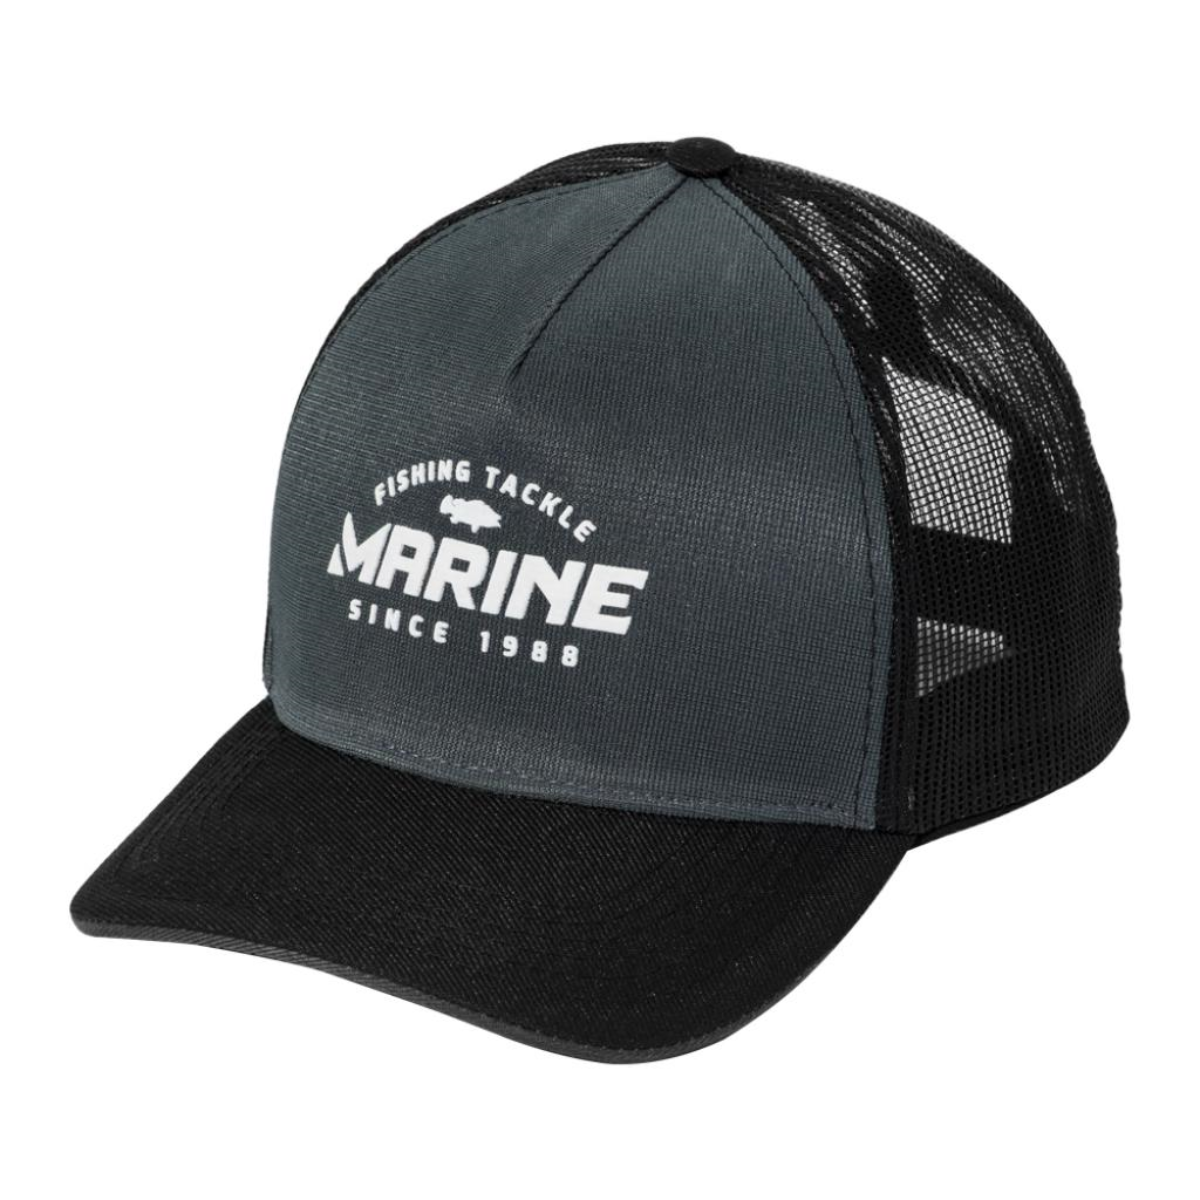 Boné Marine Sports Since 1988 - ILHA DA PESCA